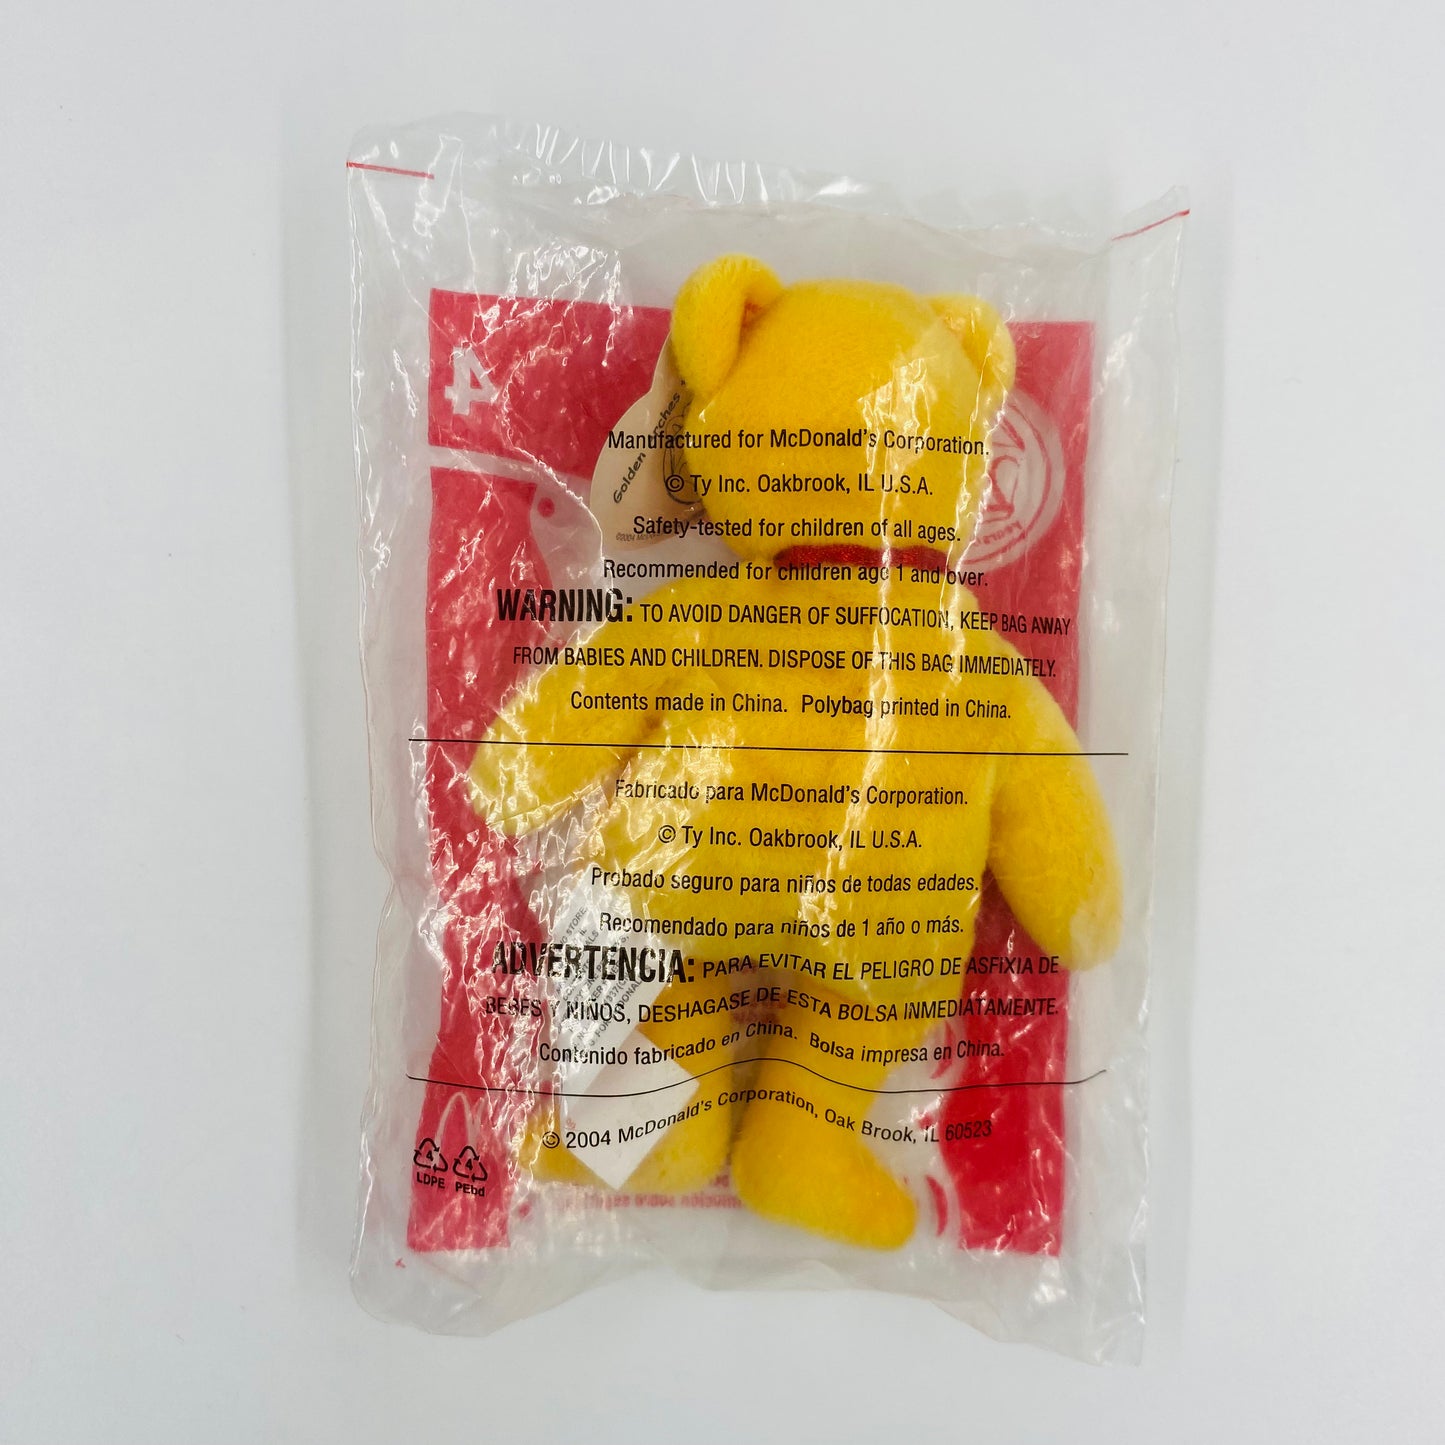 Teenie Beanie Babies Golden Arches the Bear McDonald's Happy Meal bean bag plush toy animal (2004) bagged